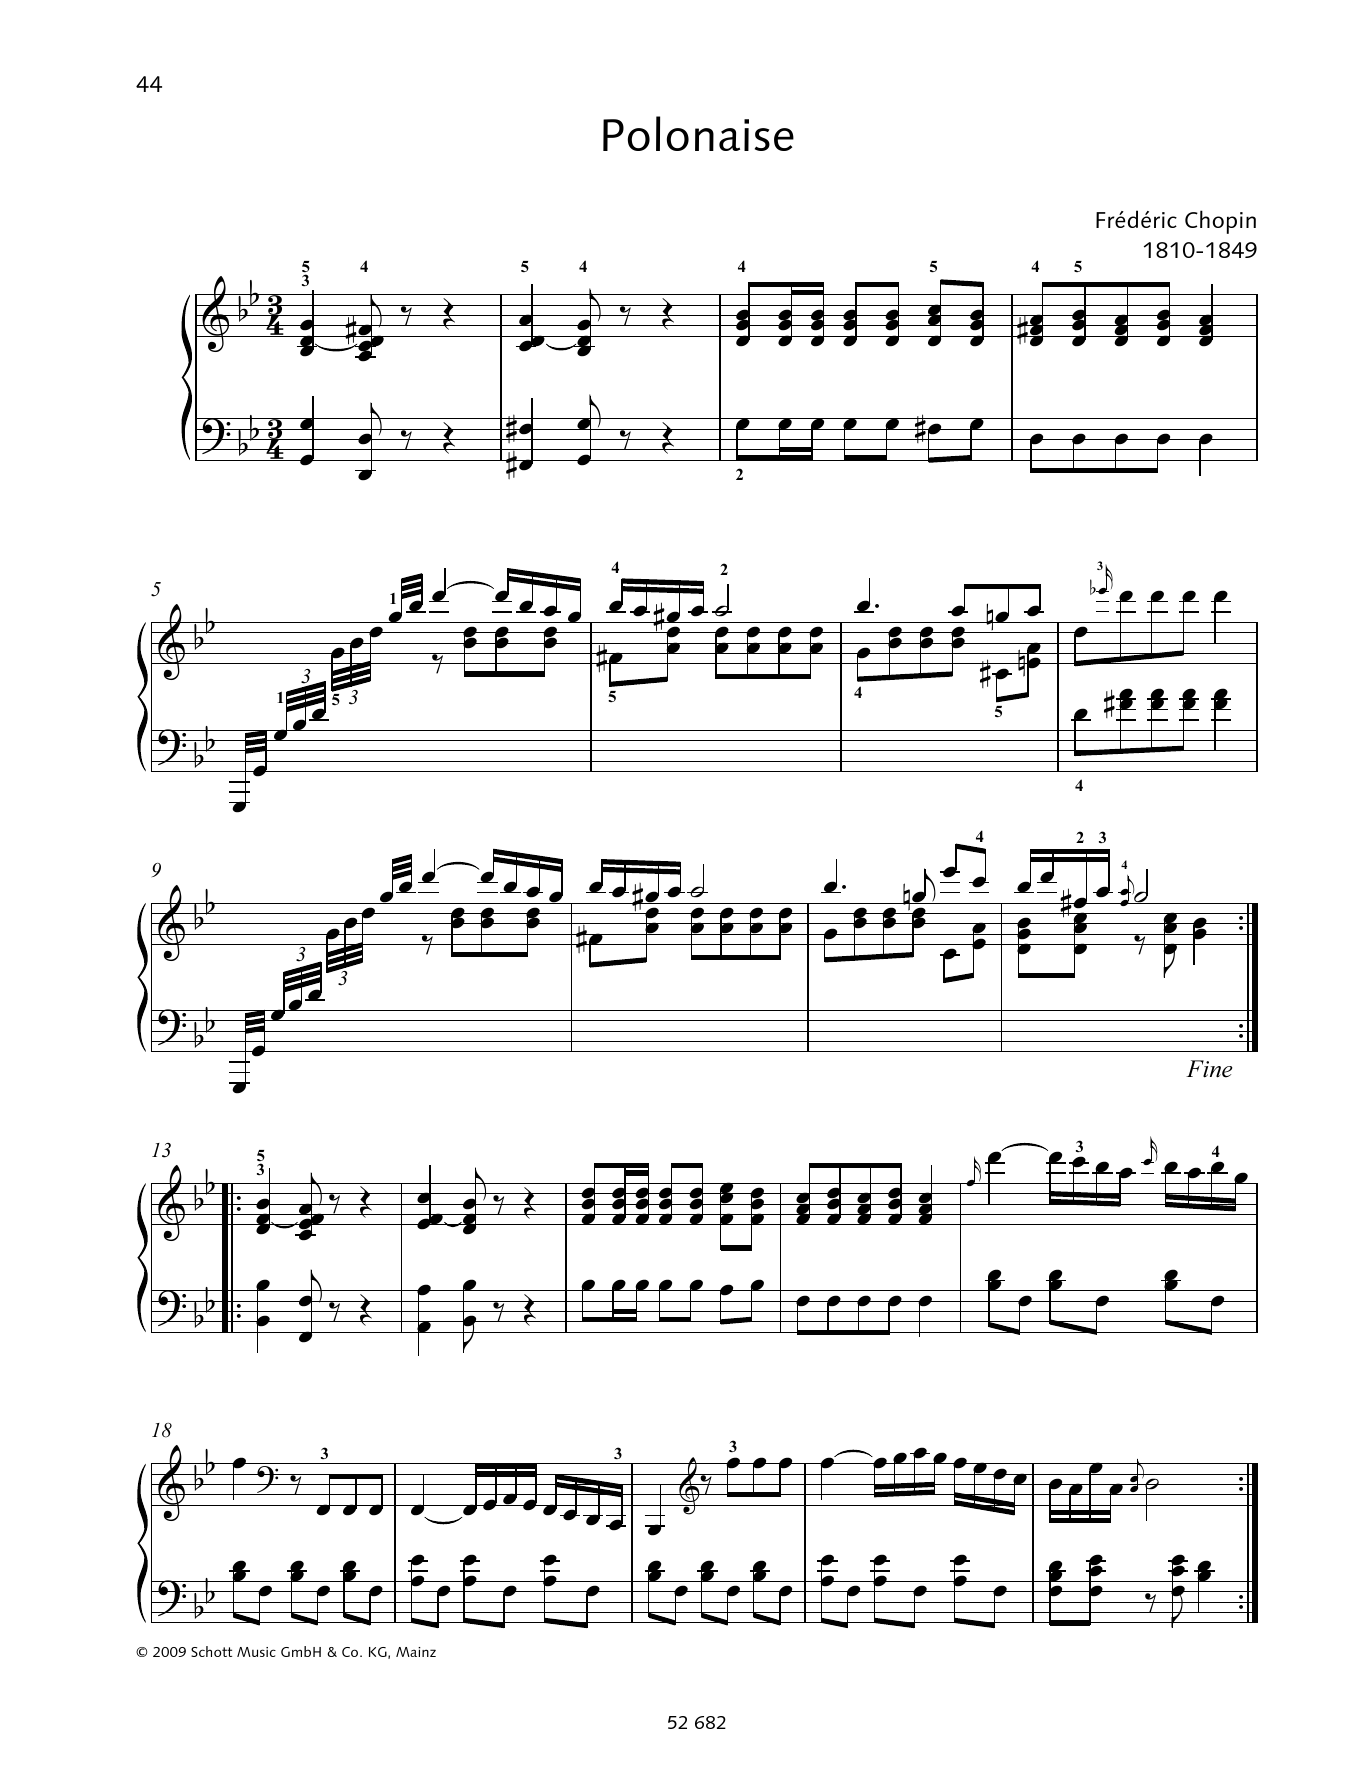 Polonaise in G minor sheet music